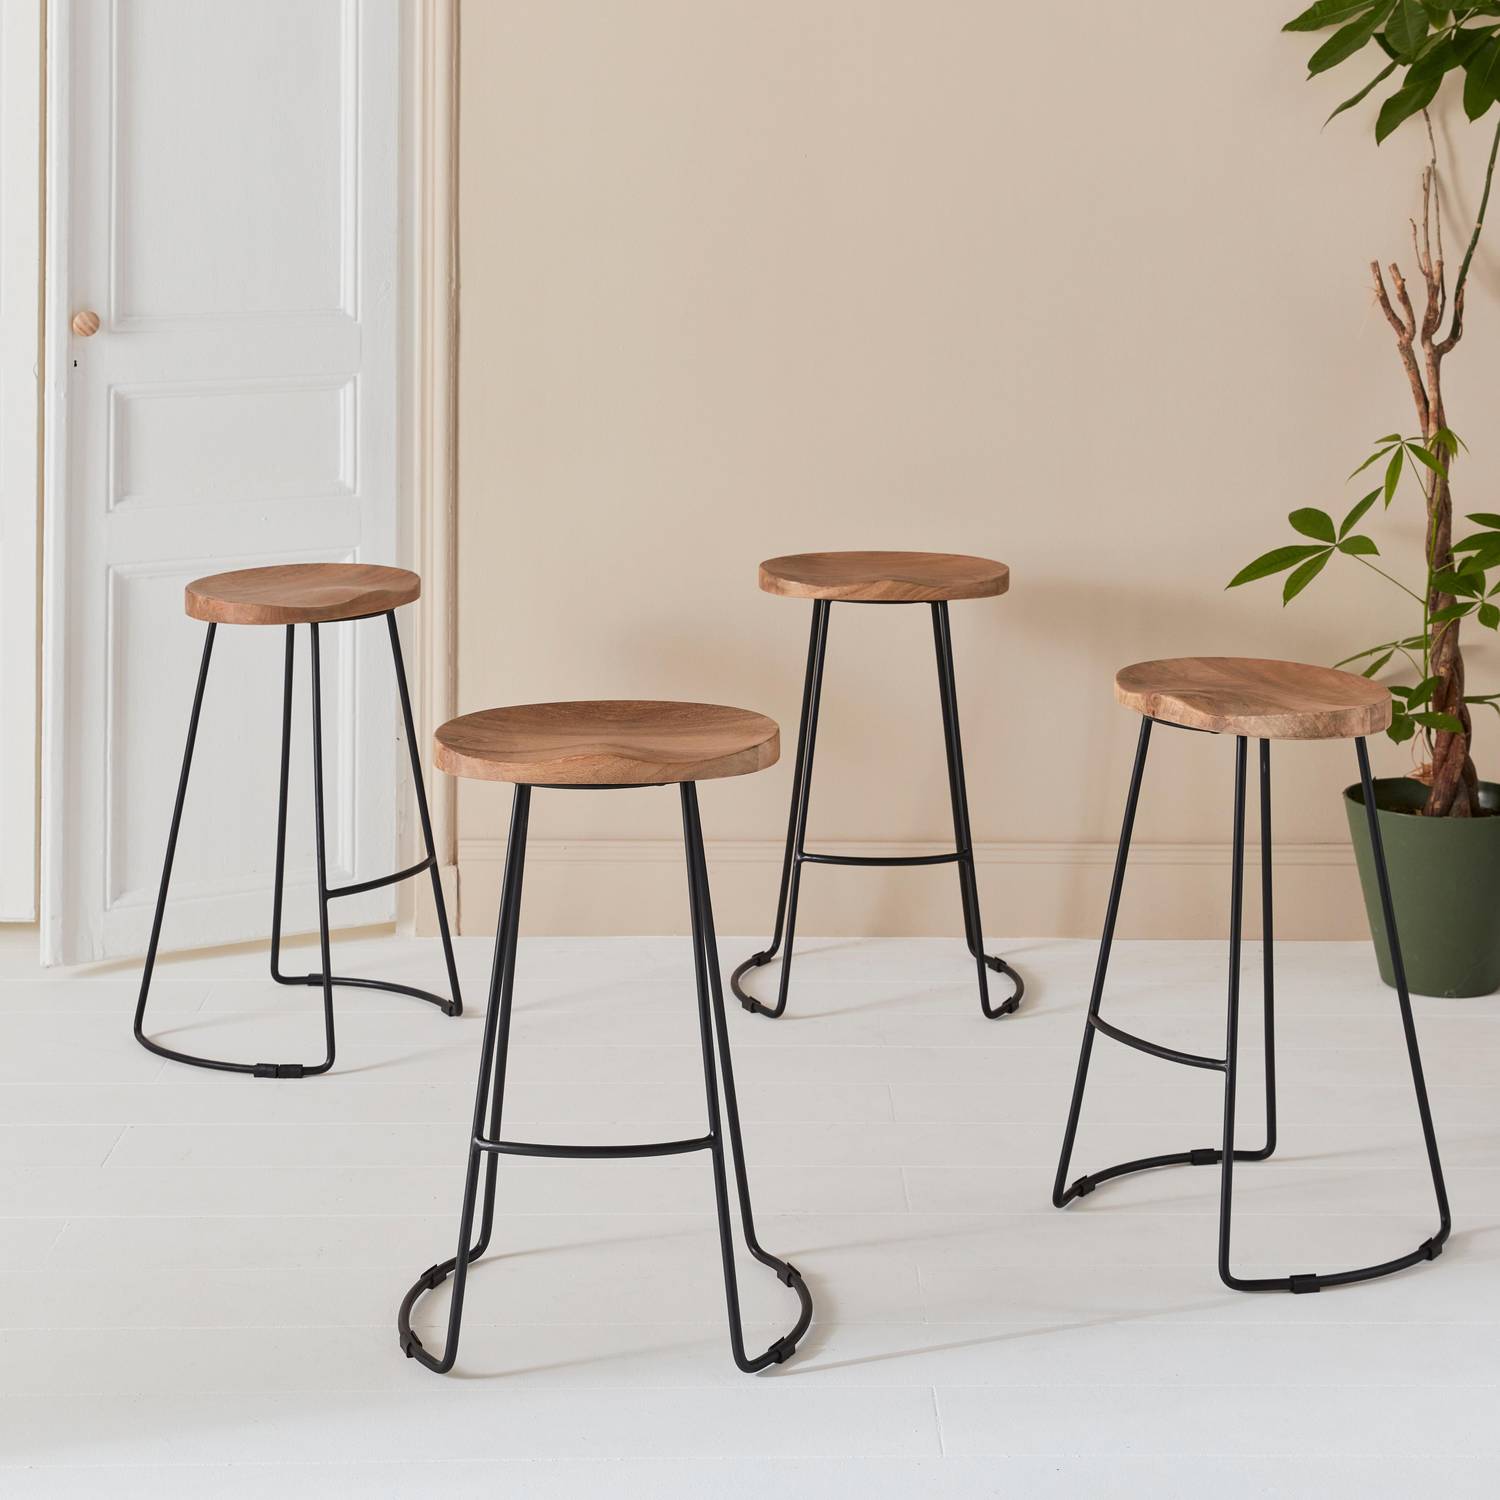 Set of 4 industrial metal and wooden bar stools, 44x36x65cm, Jaya, Mango wood seat, black metal legs Photo1